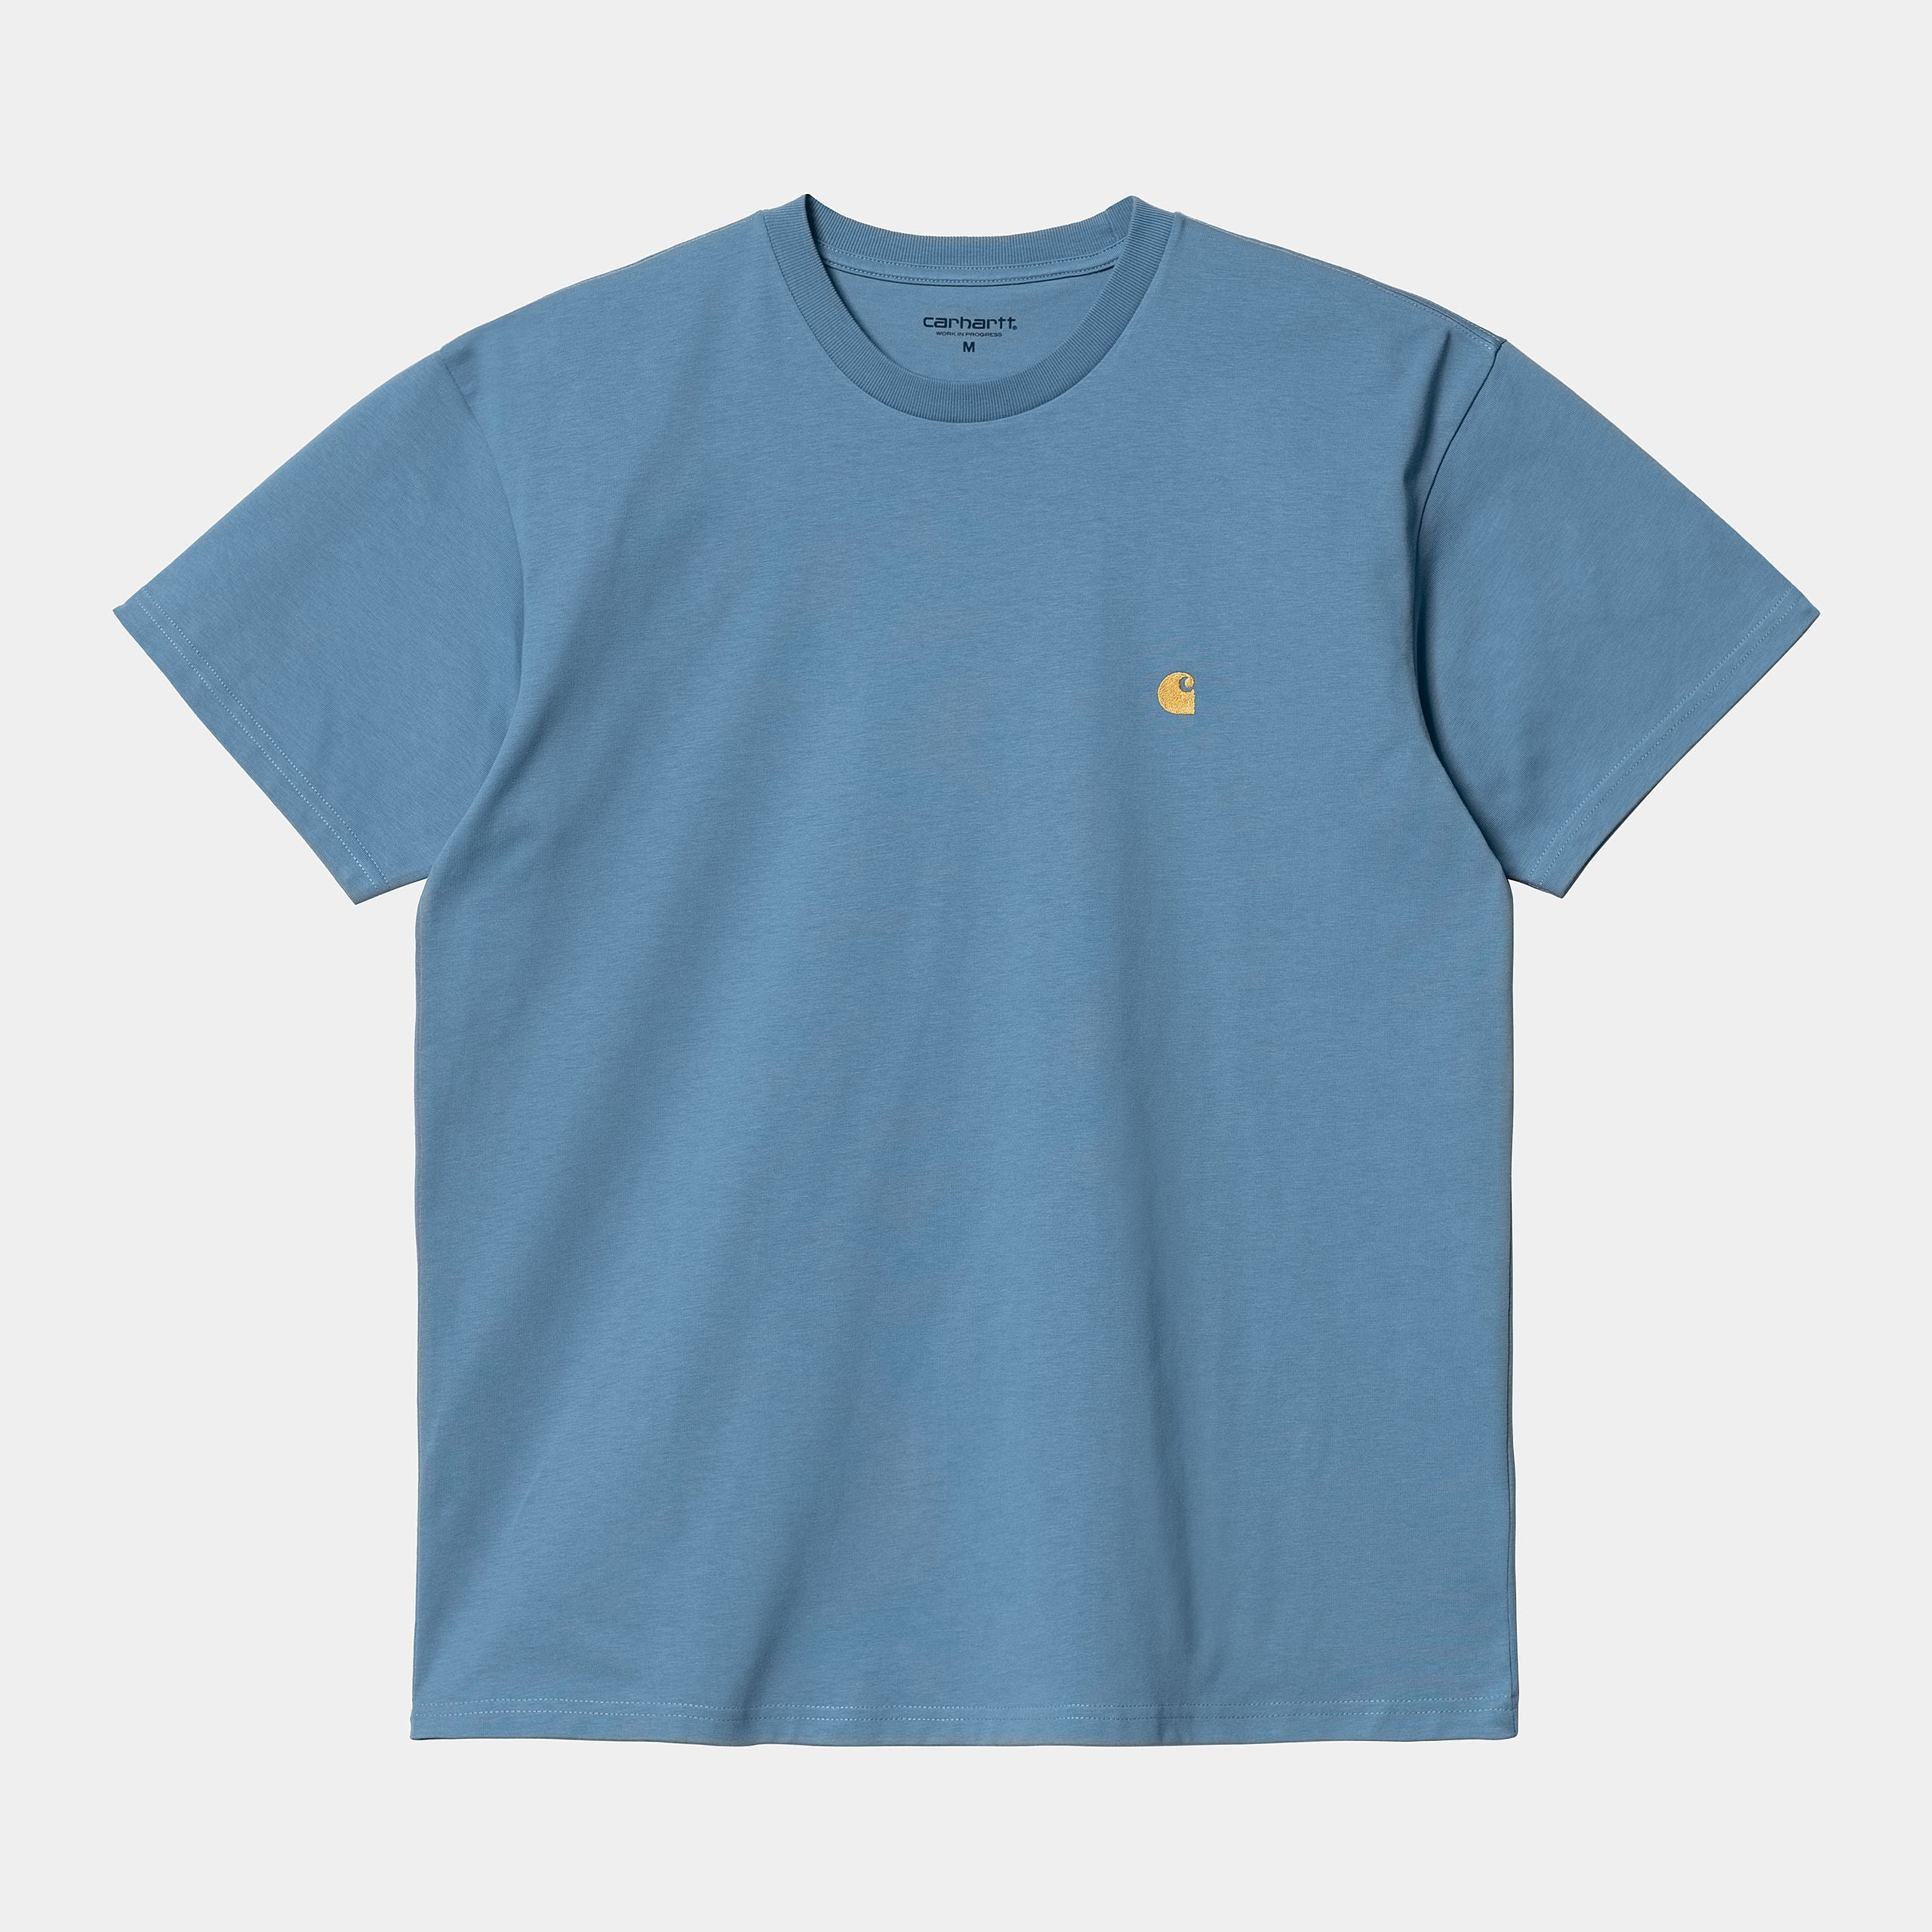 cARhartt chase herren t-shirt weit geschnitten in hell blau mit goldenen gestickten carhartt C logo in gold